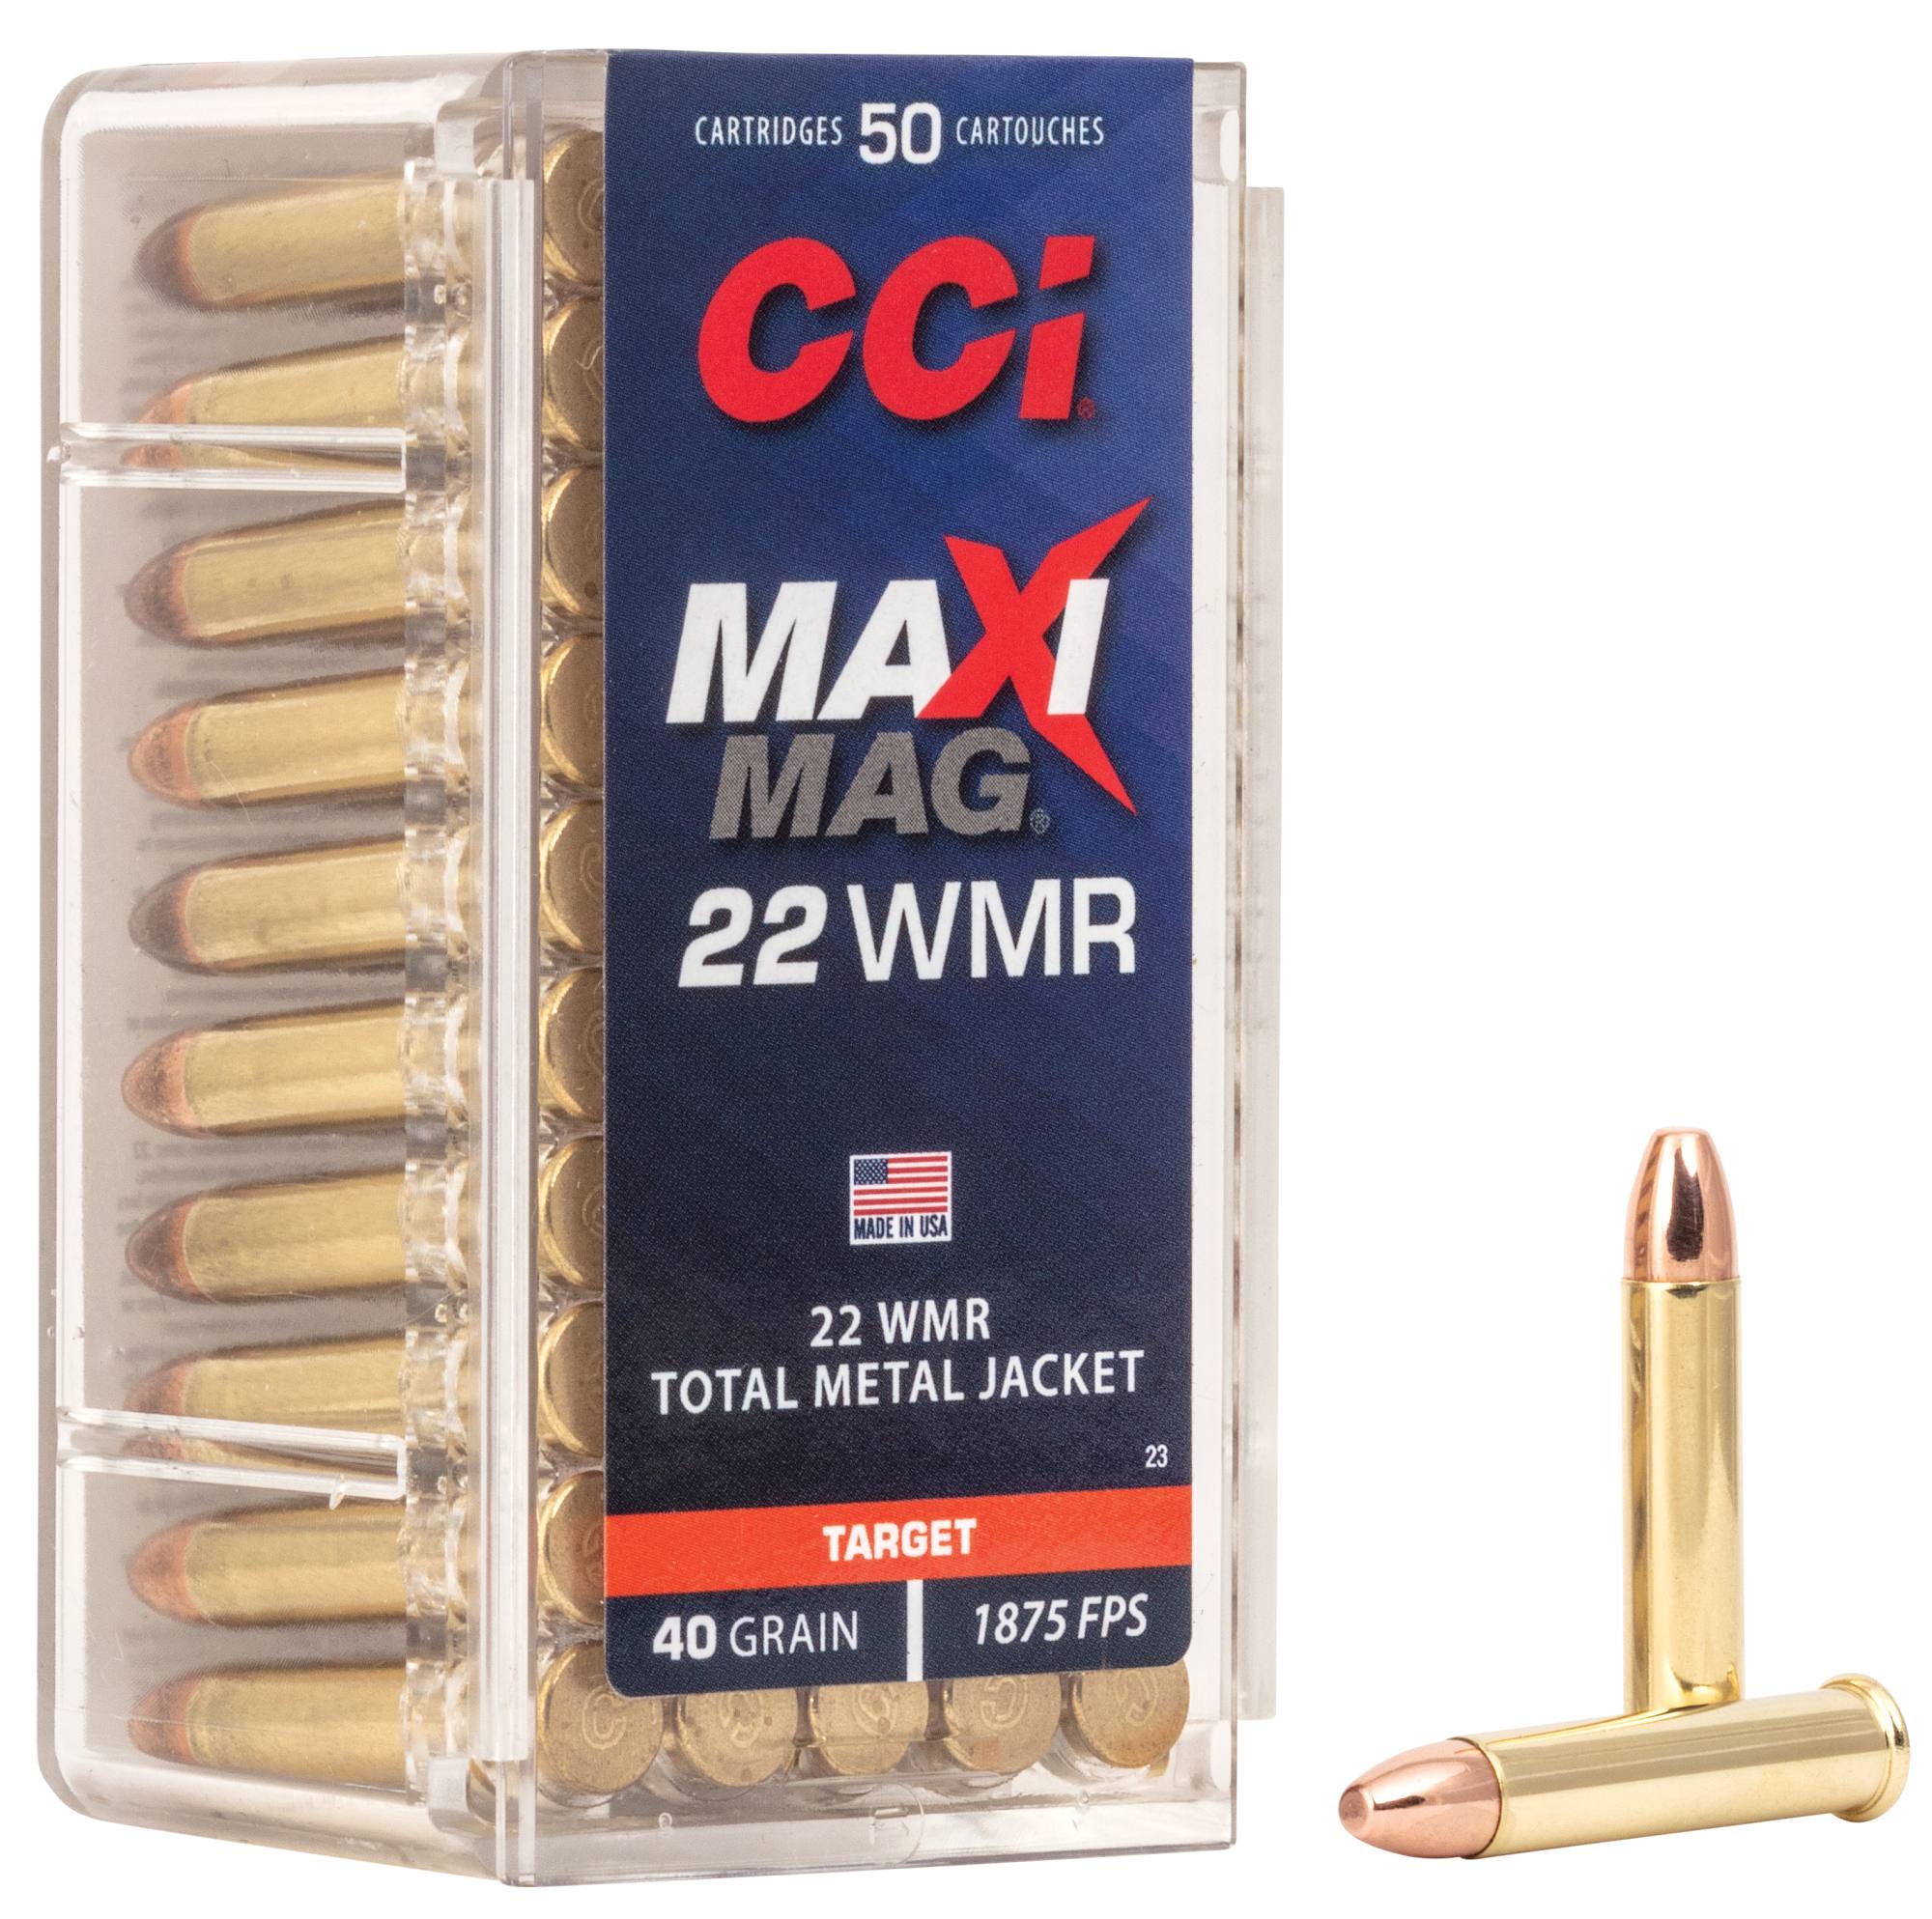 CCI Maxi-Mag Ammunition 22 Winchester Magnum Rimfire (WMR) 40 Grain Total Metal Jacket